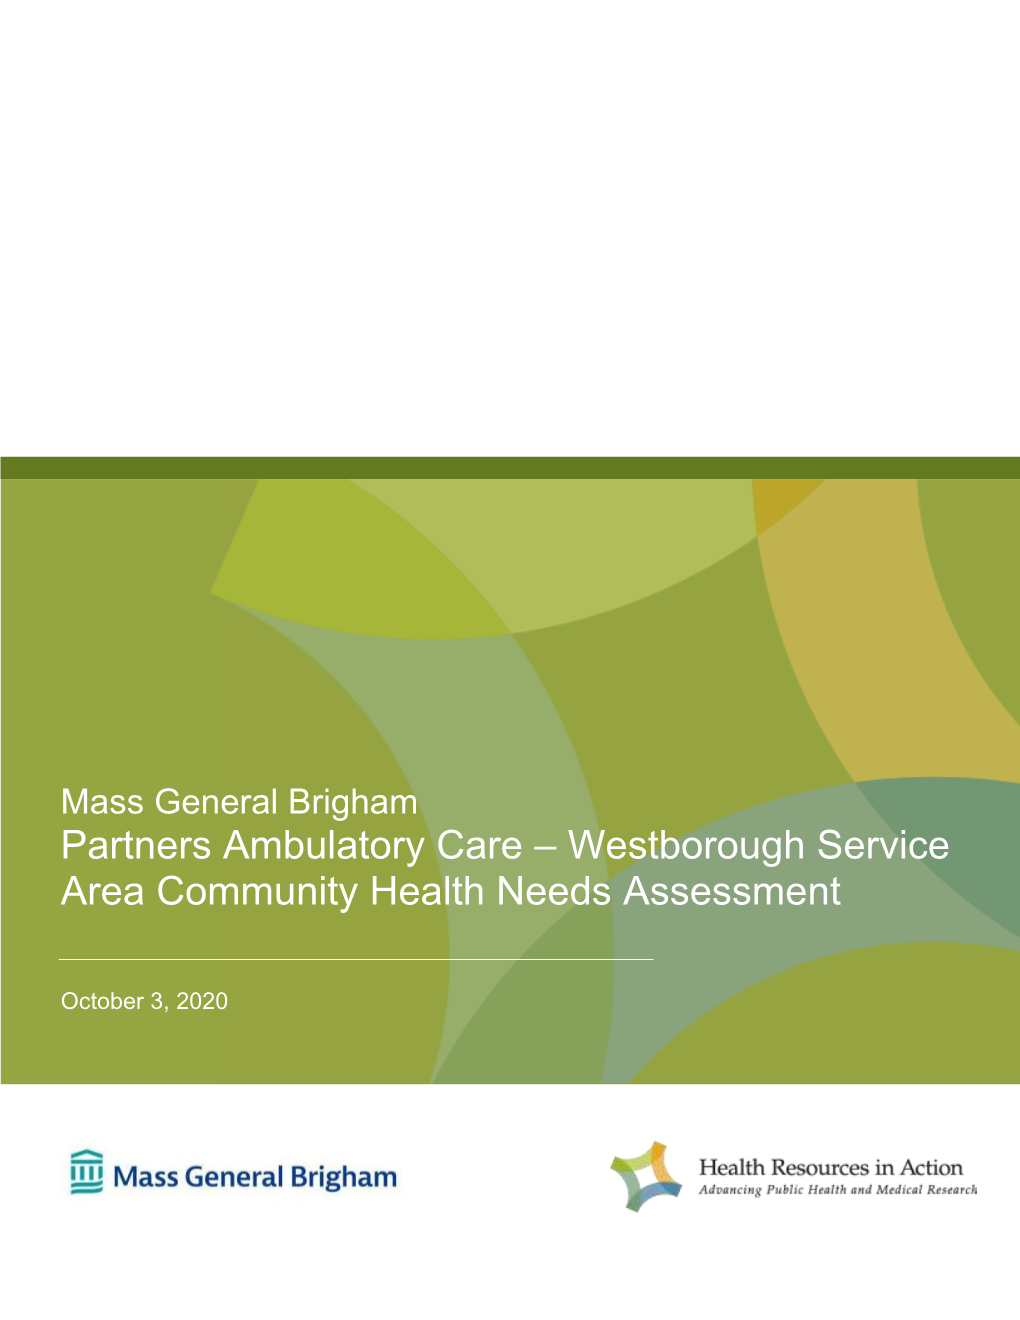 Partners Ambulatory Care – Westborough Service Area Community Health Needs Assessment